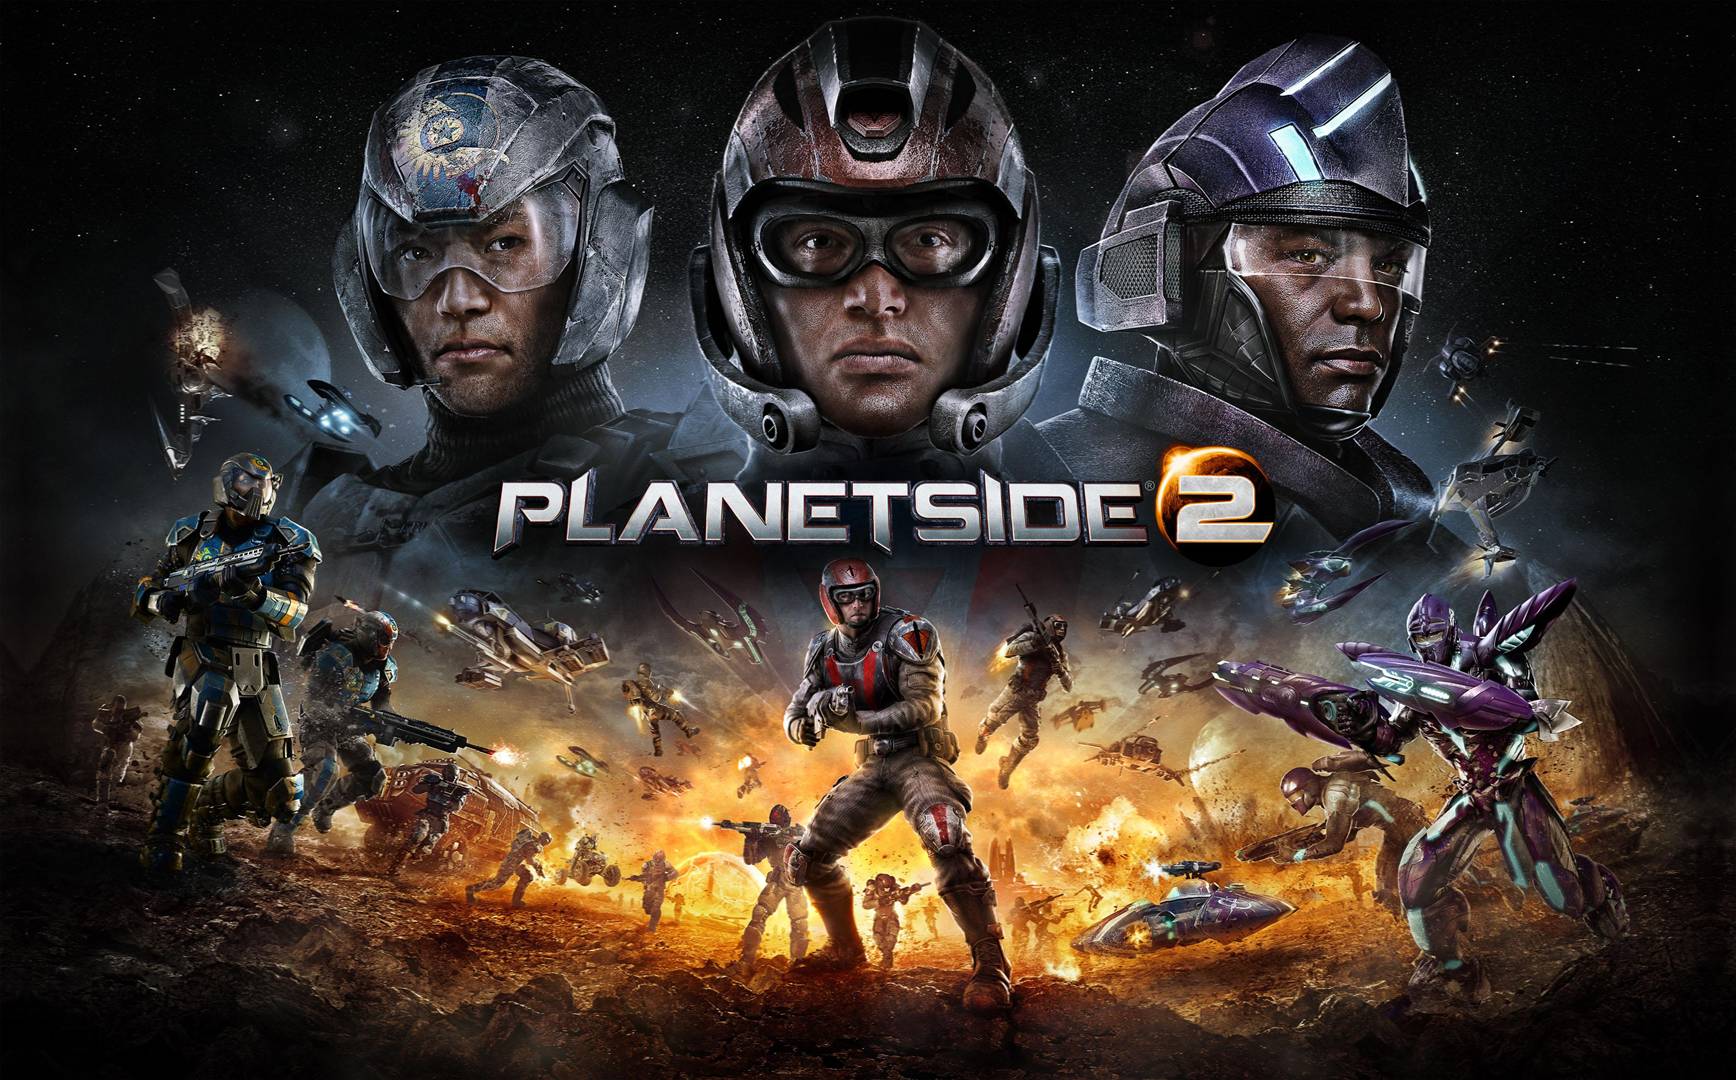  Planetside 2 free download